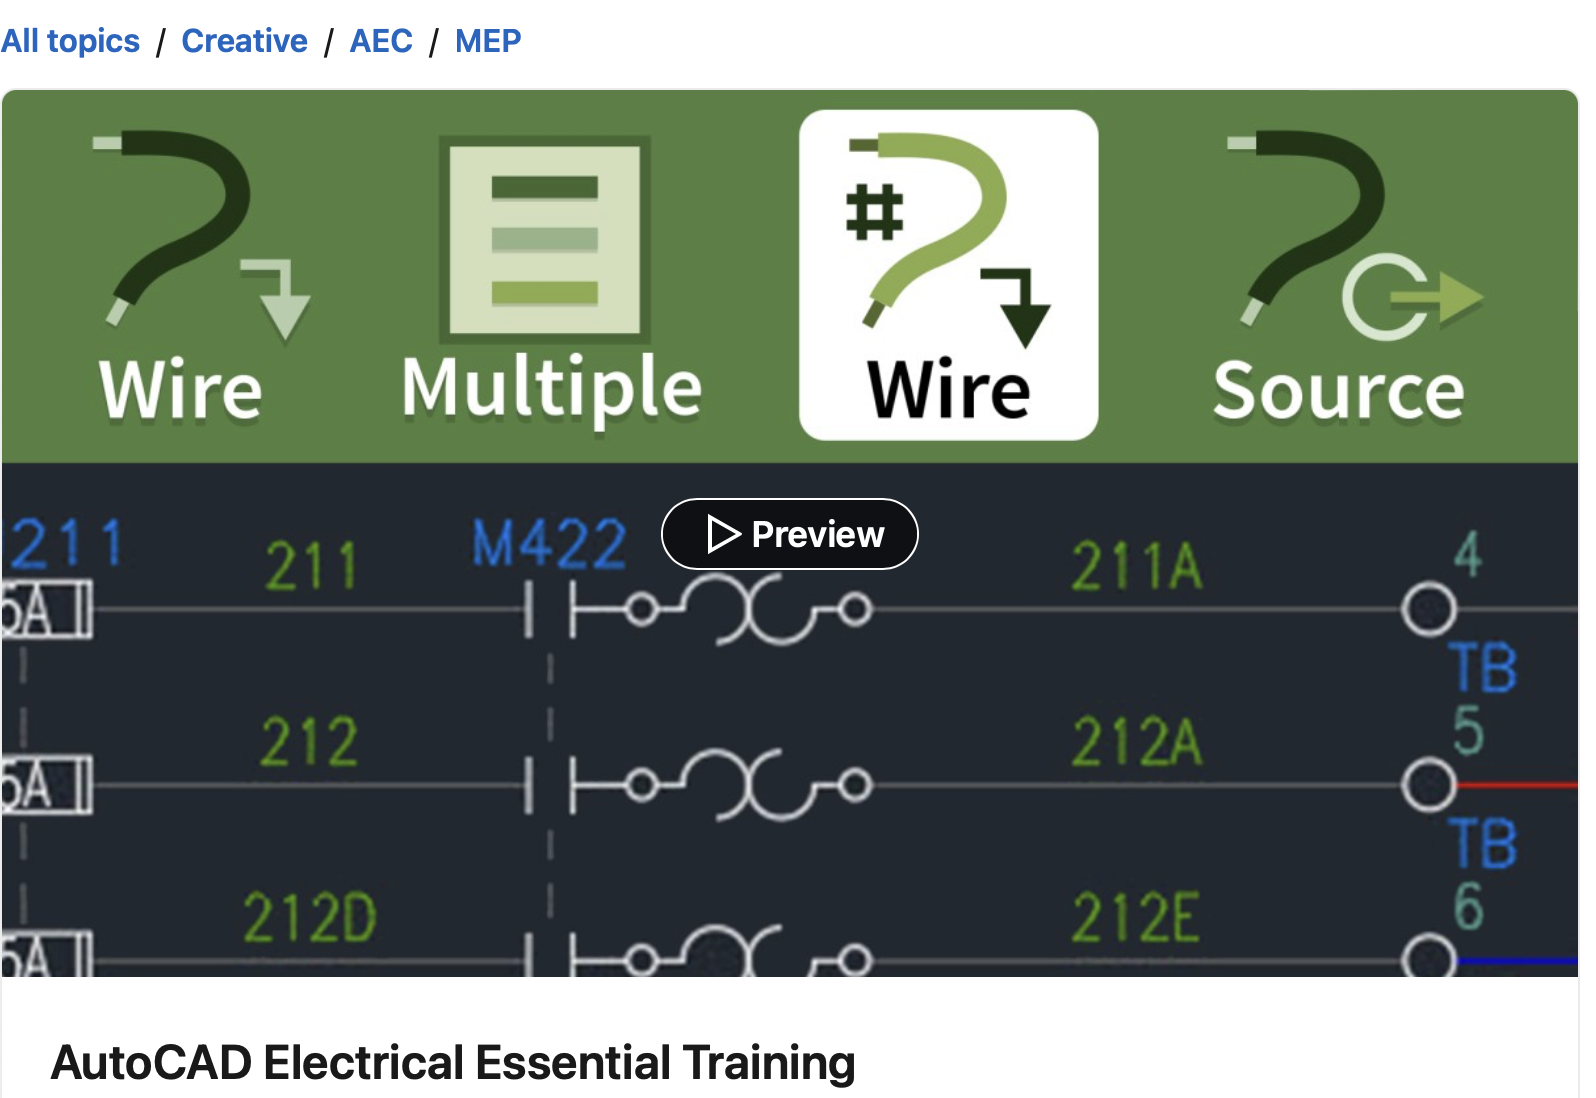 AutoCAD Electrical Essential Training